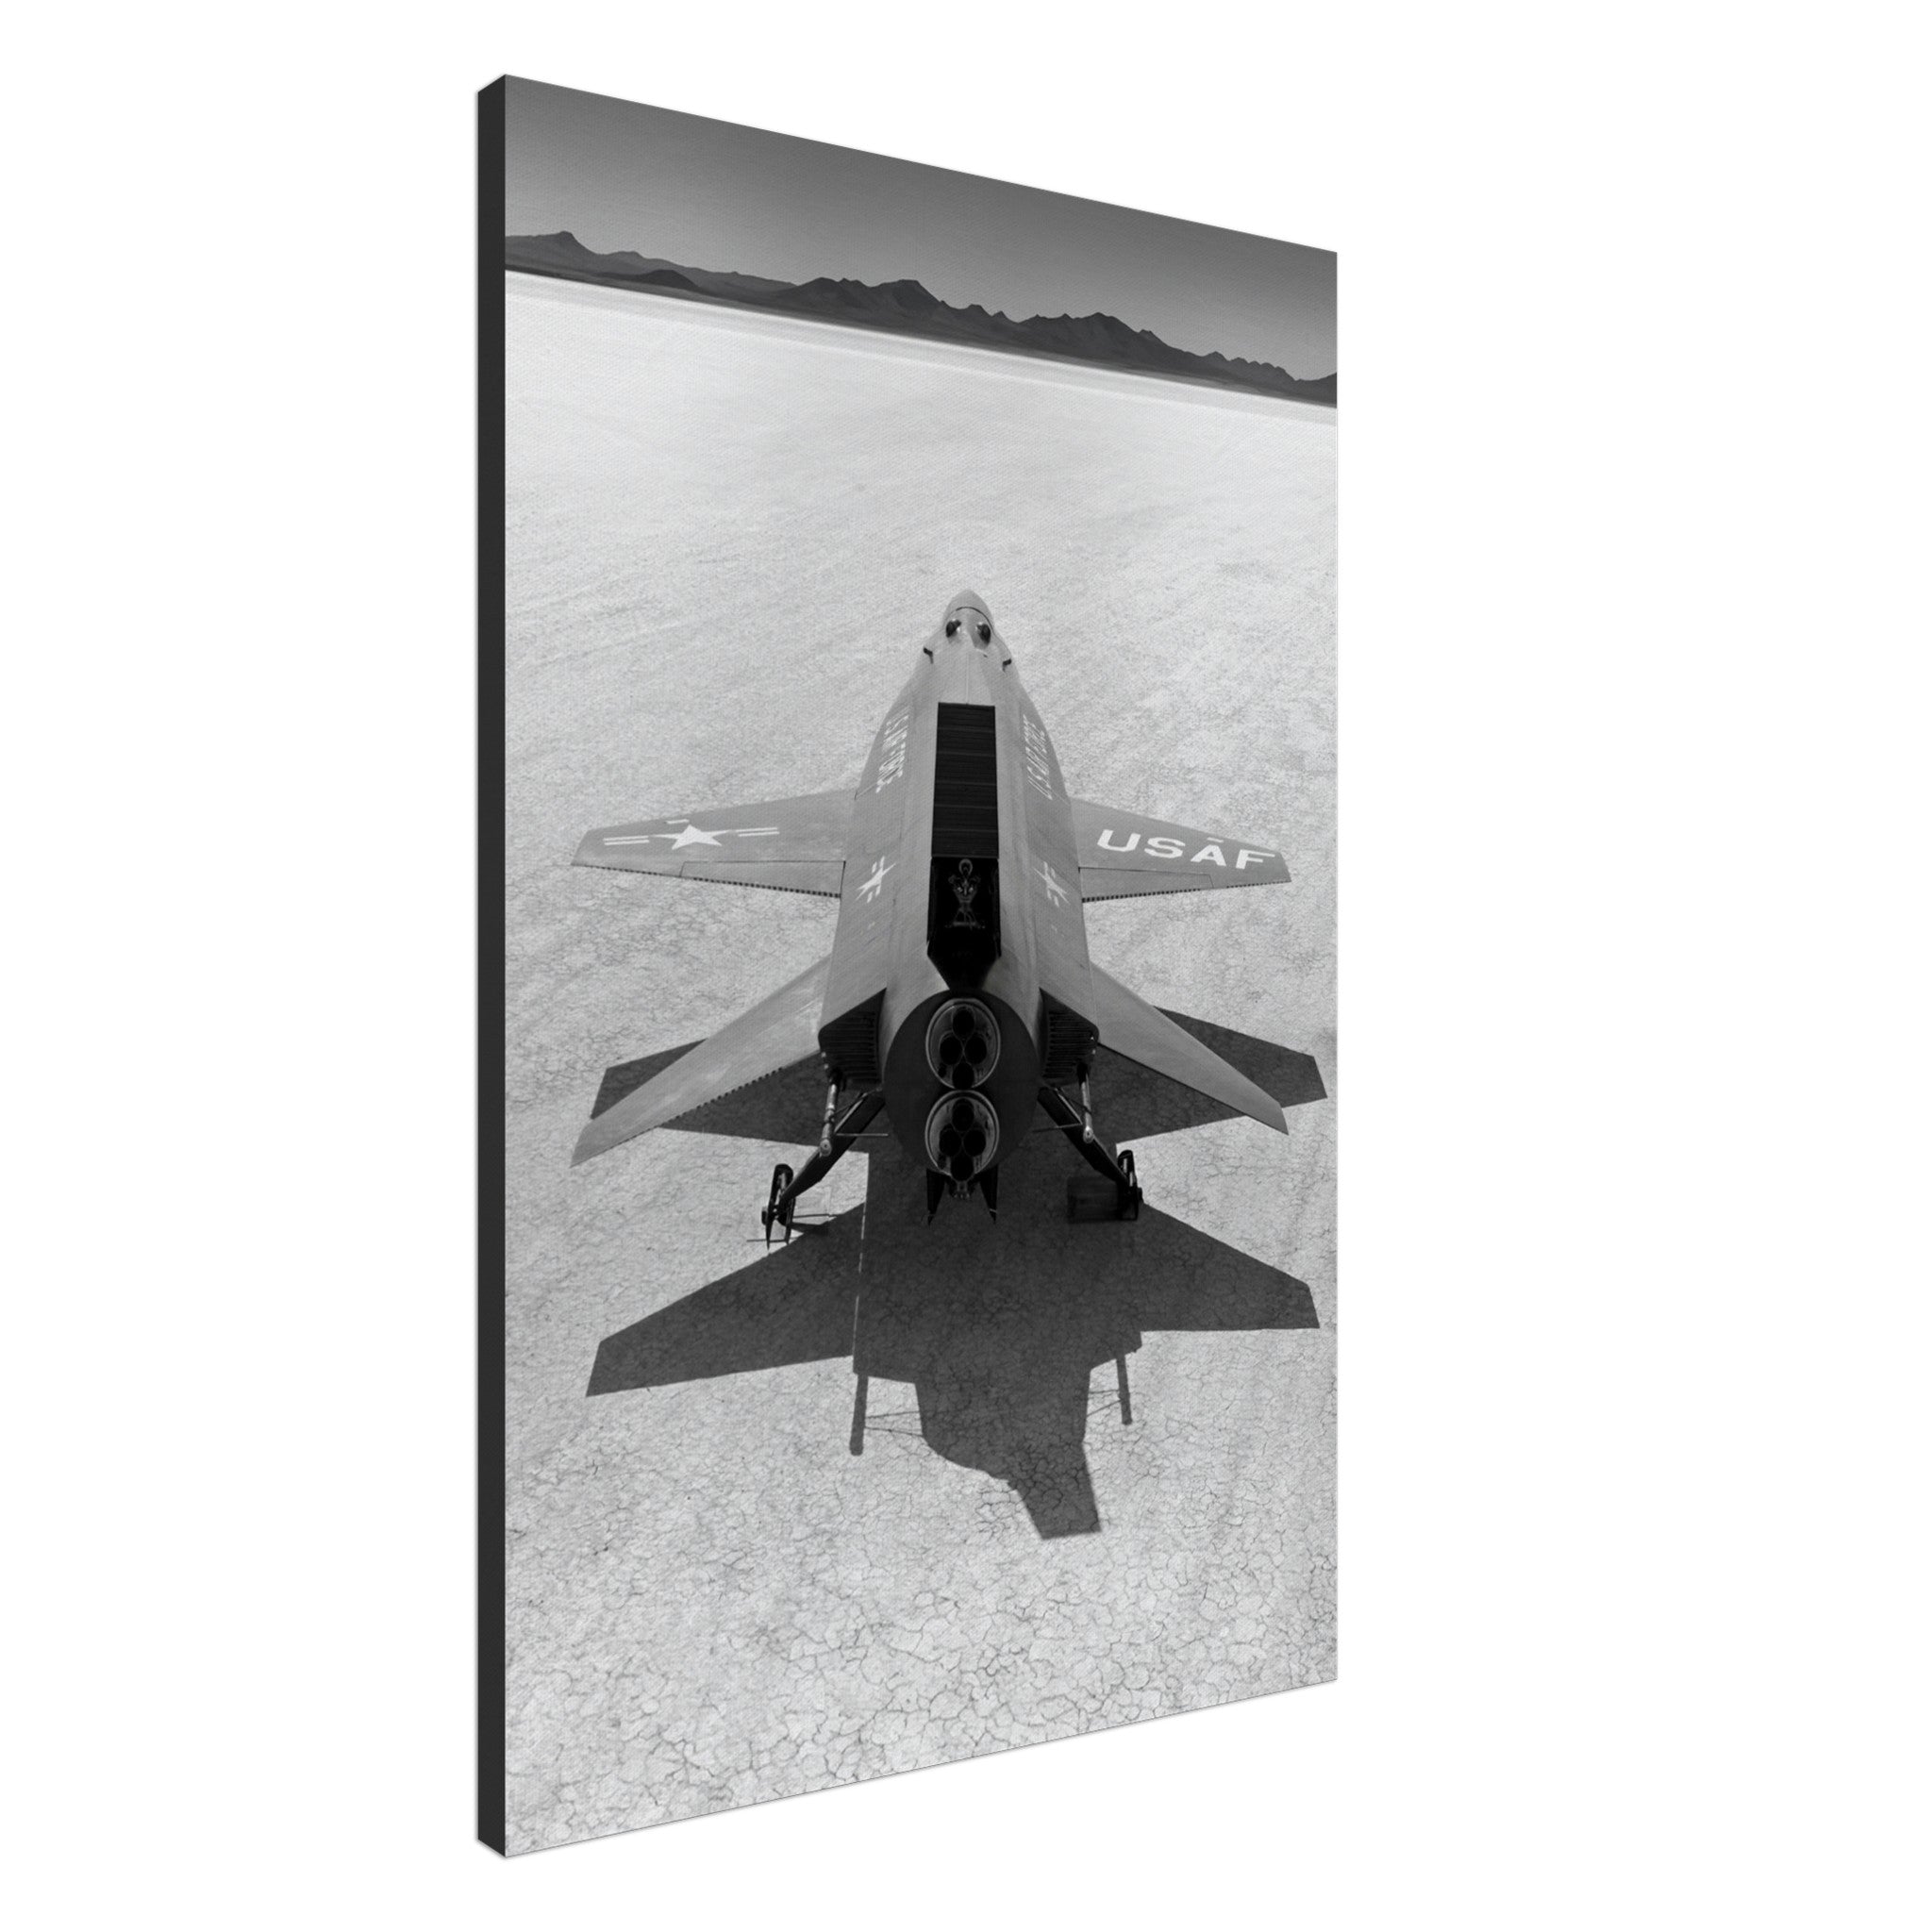 X-15 on Canvas - I Love a Hangar